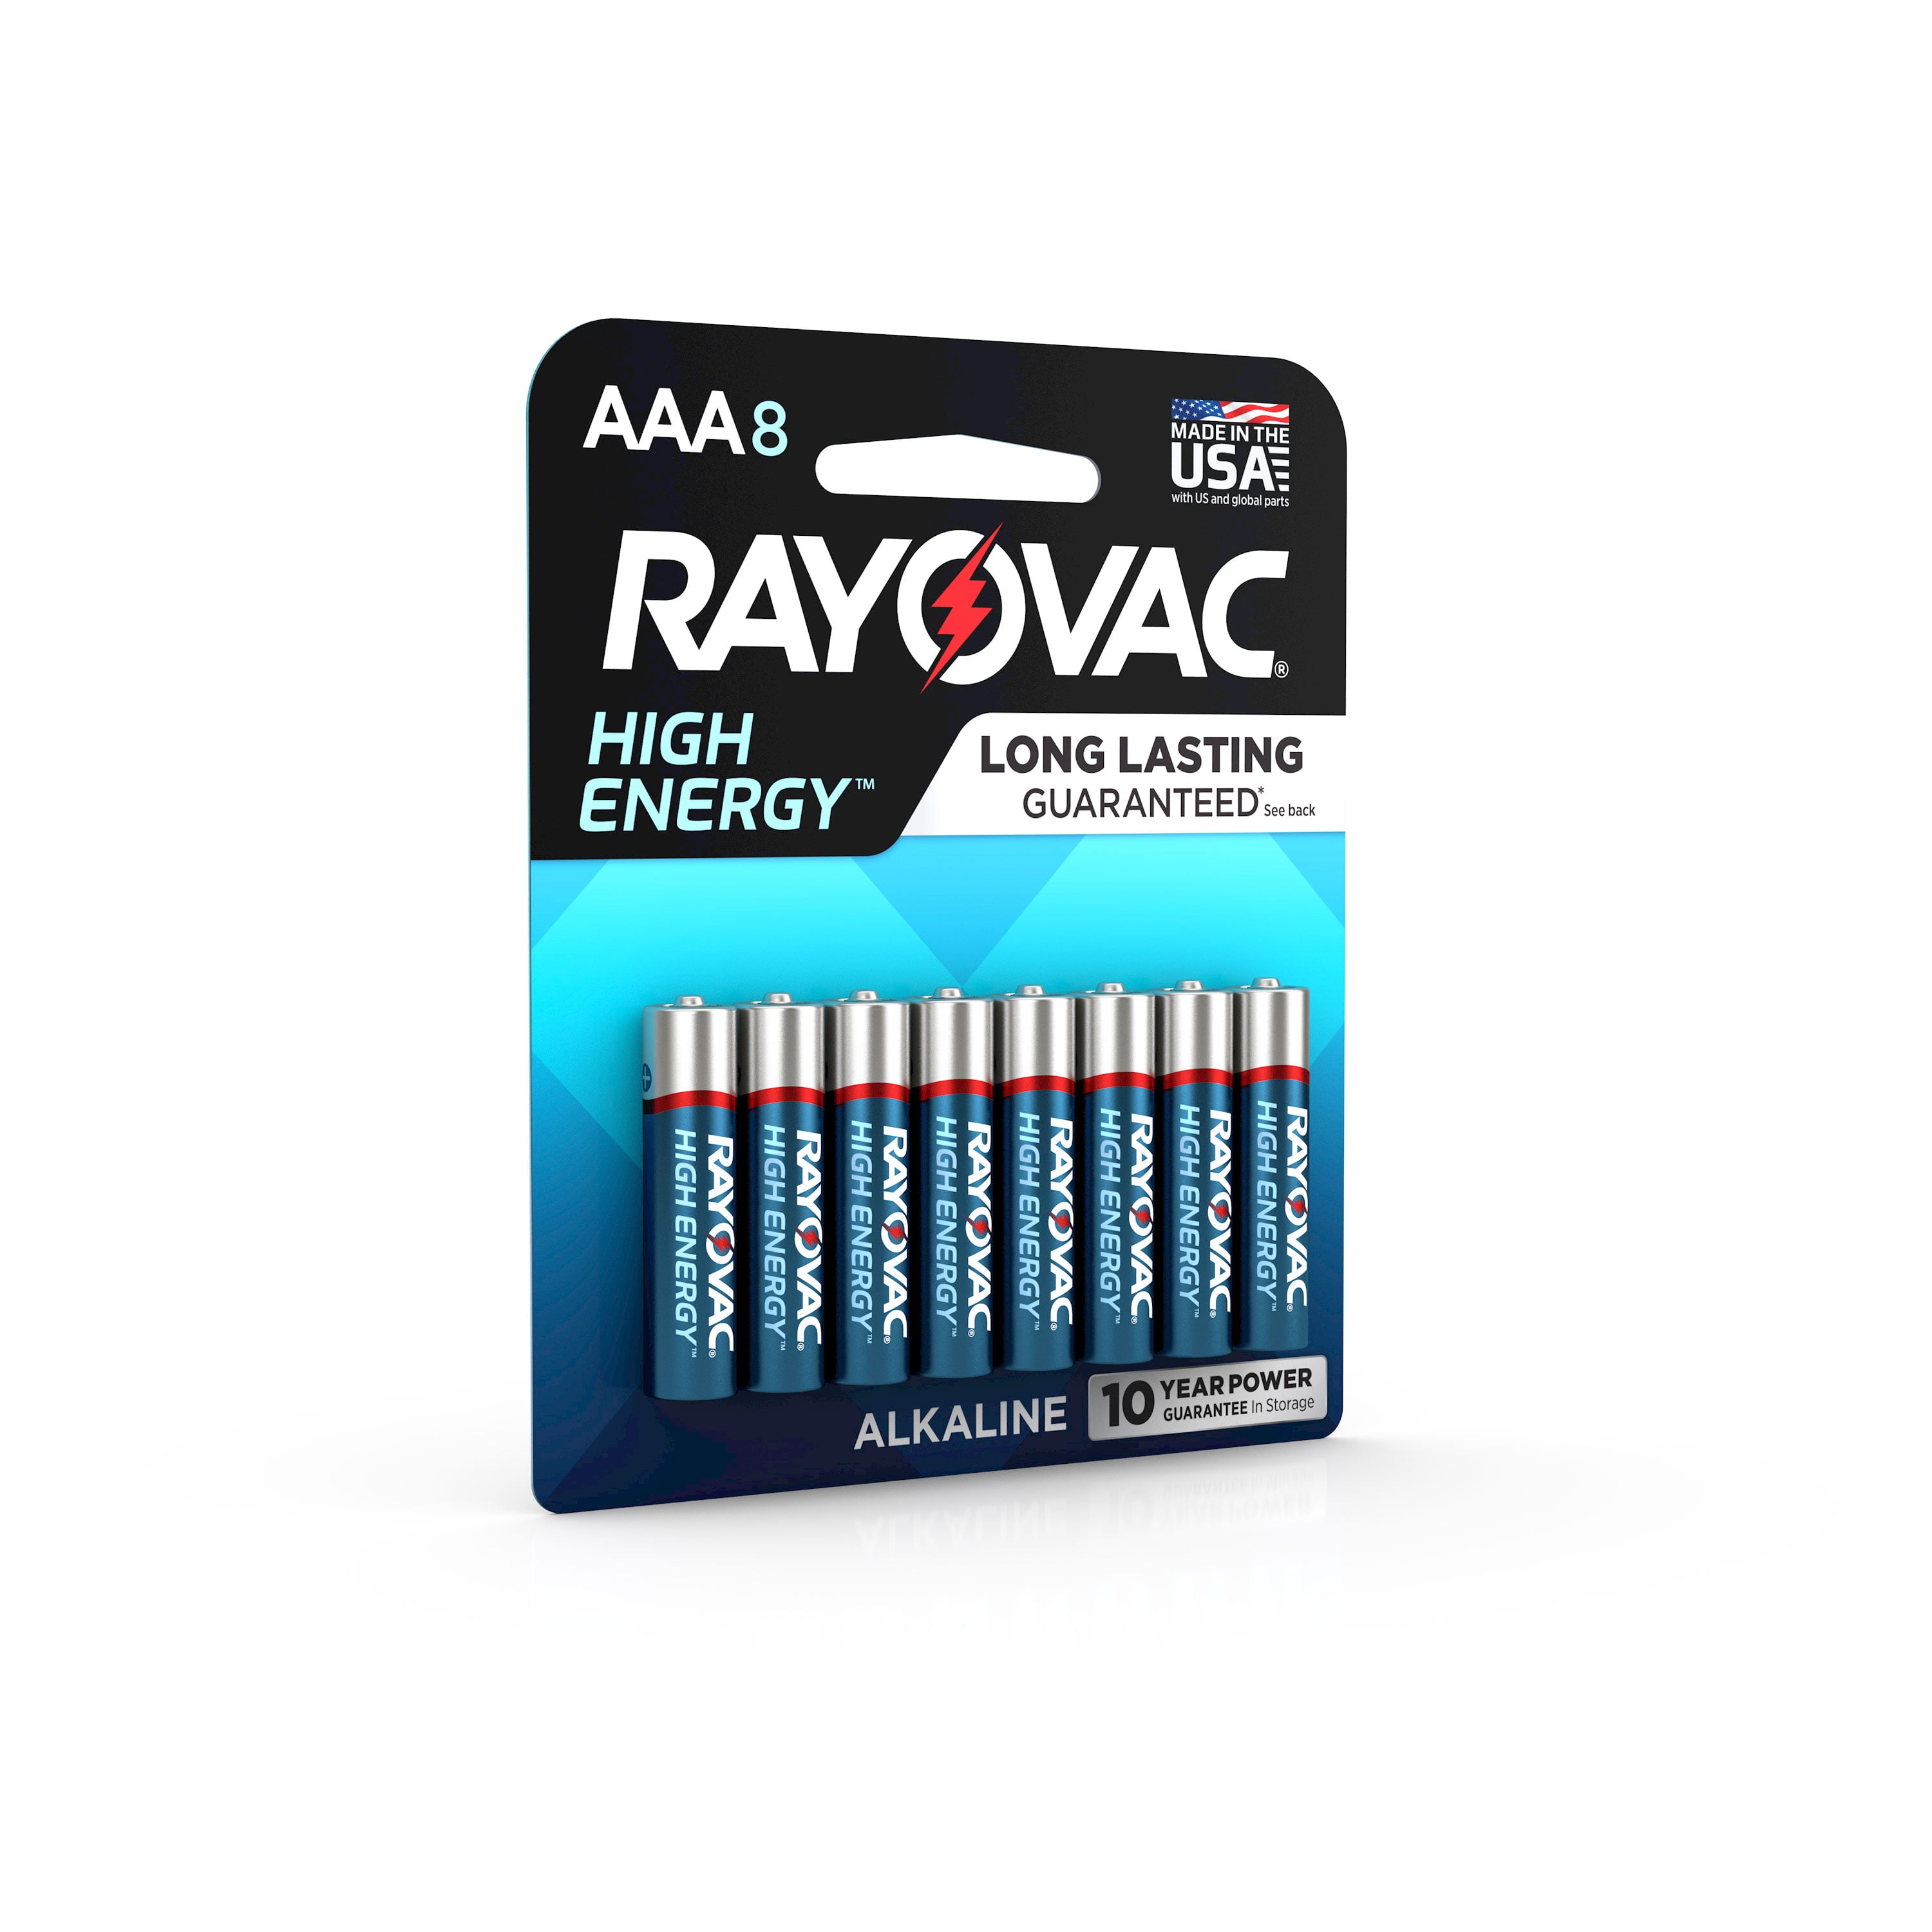 Rayovac High Energy Alkaline Aaa Batteries 8 Count